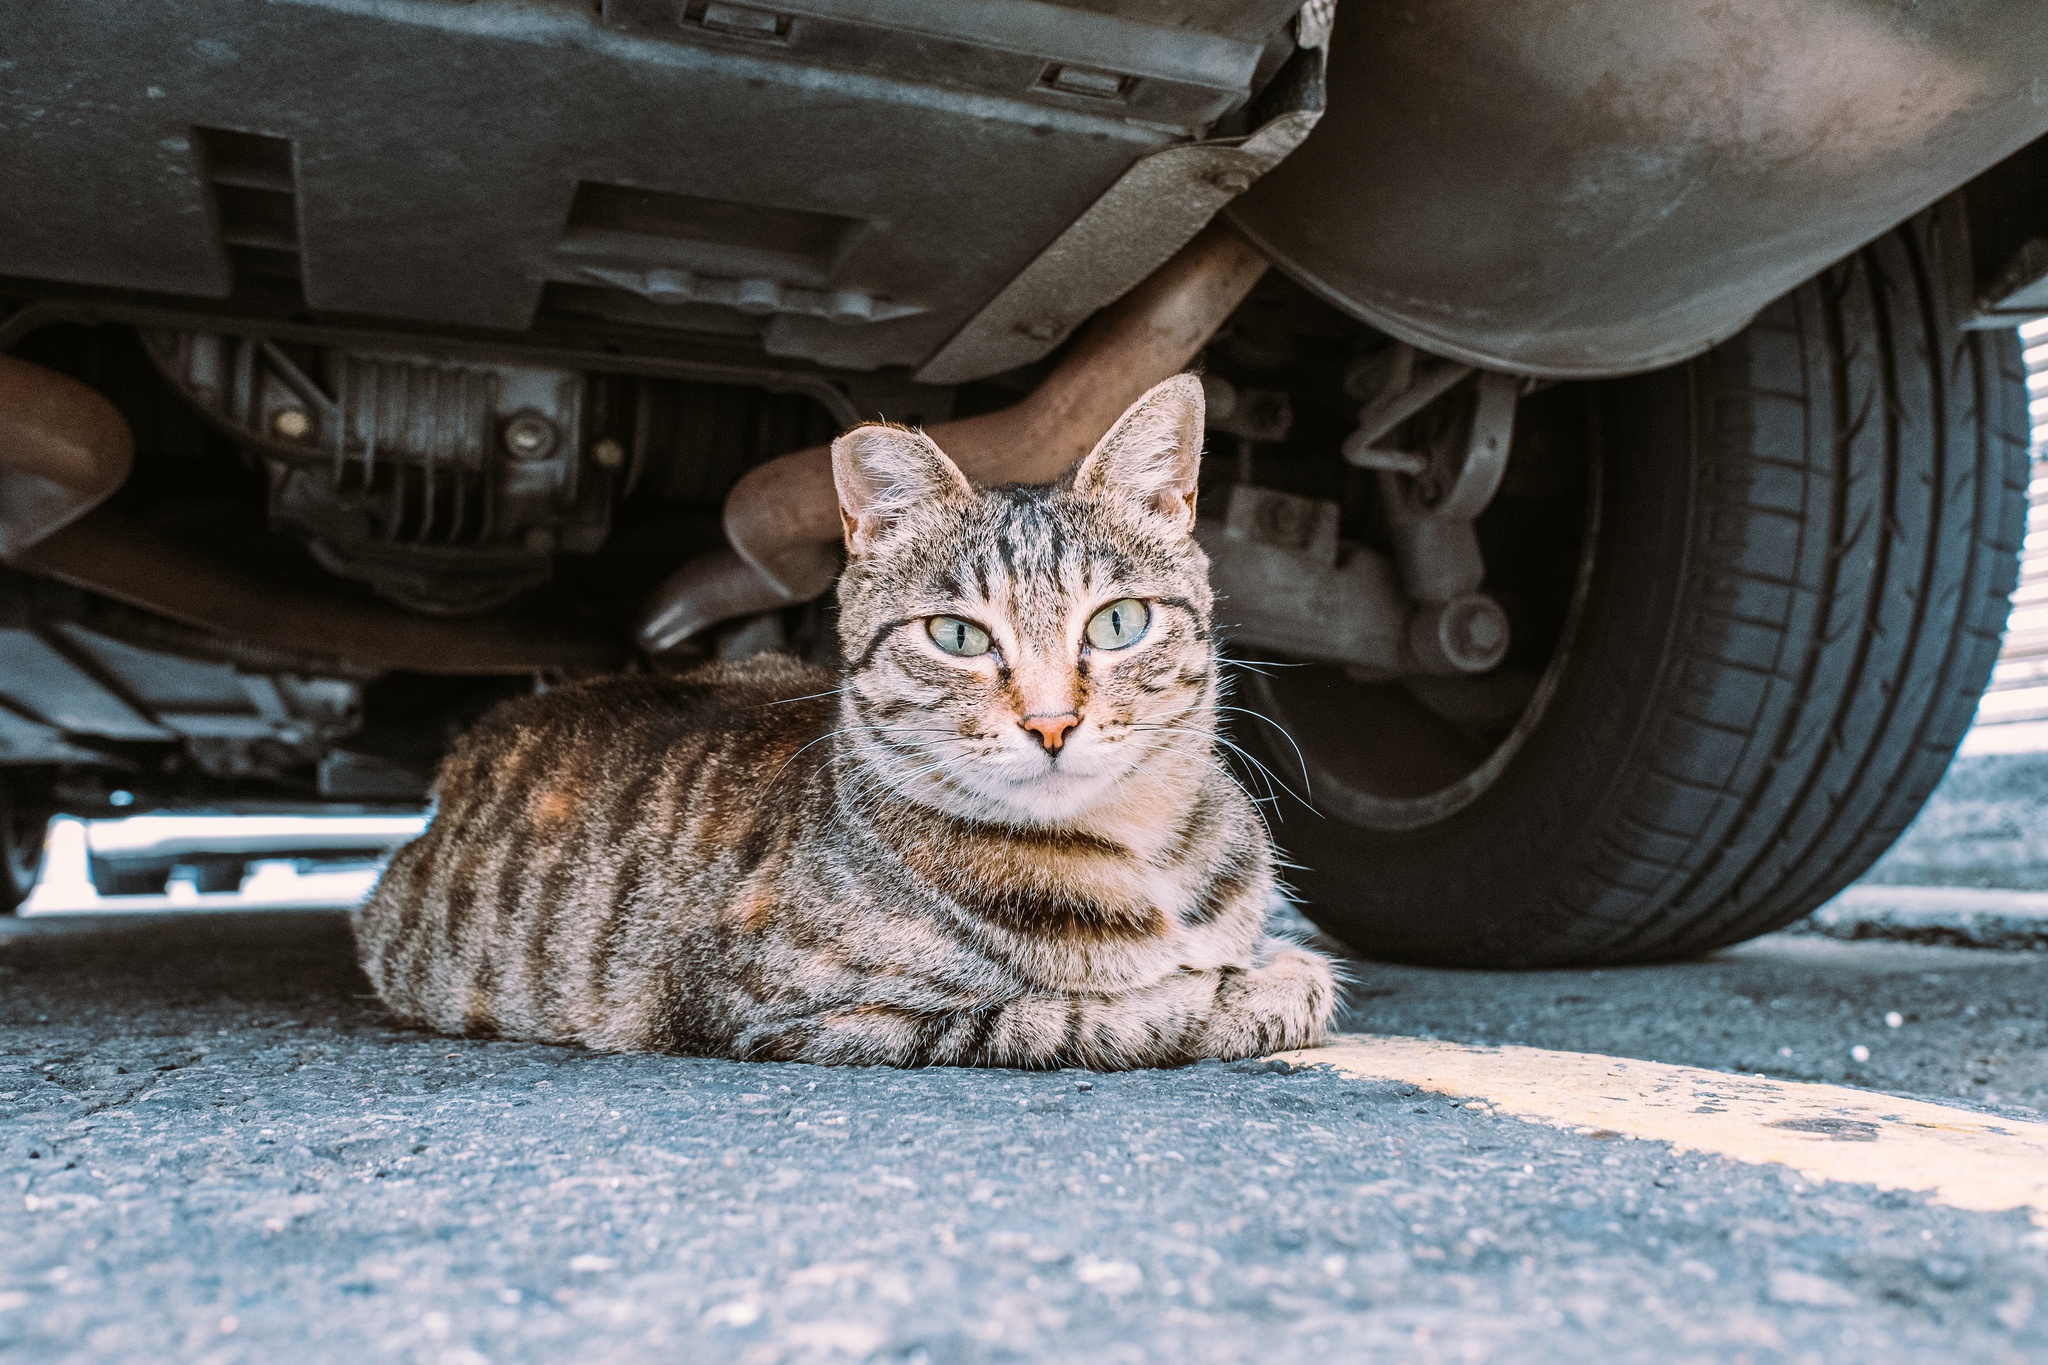 General 2048x1365 car vehicle cats animals pet